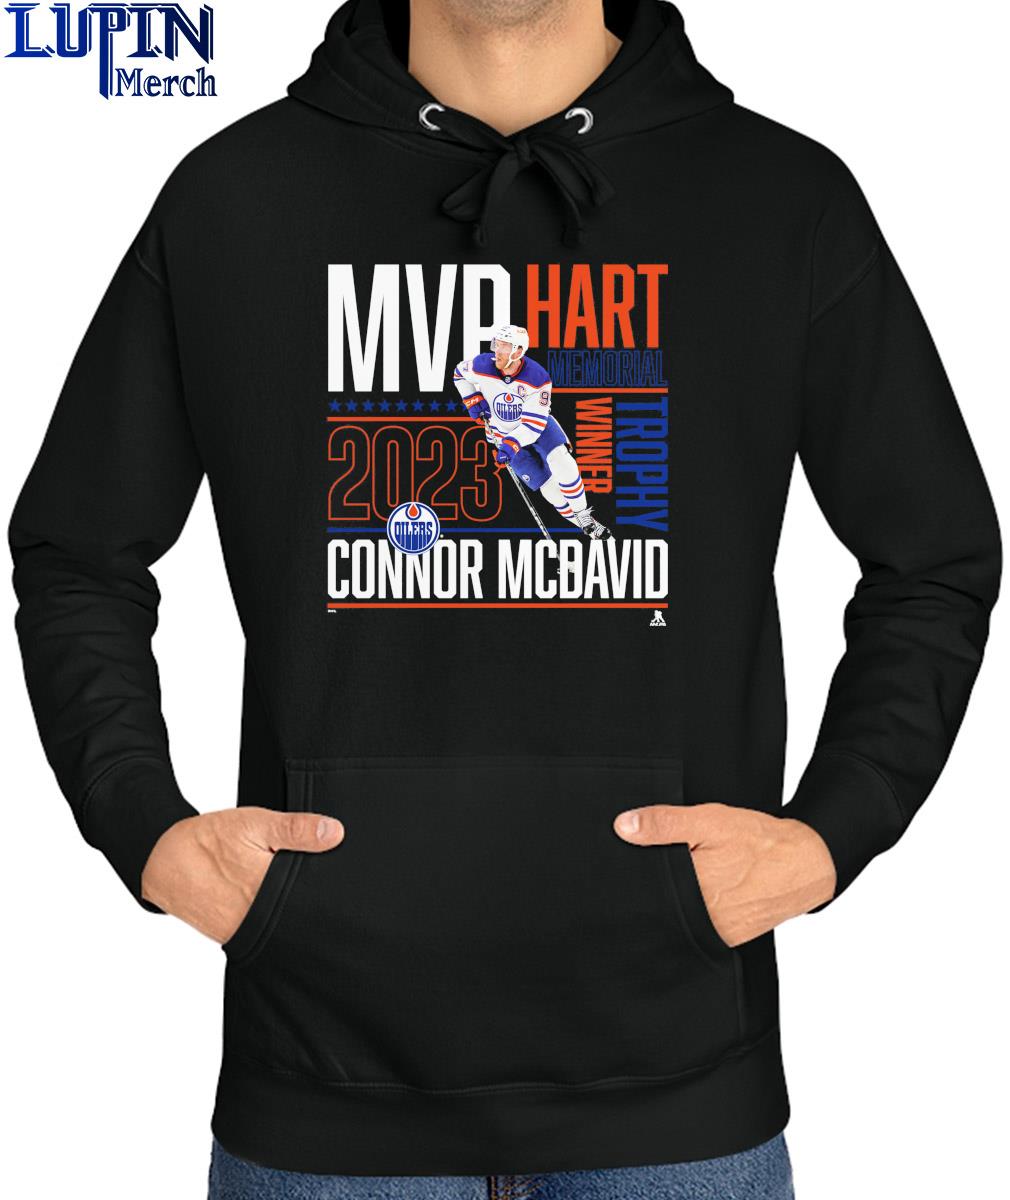 Connor McDavid Edmonton Oilers MVP hart memorial trophy winner 2023 T-shirt,  hoodie, sweater, long sleeve and tank top